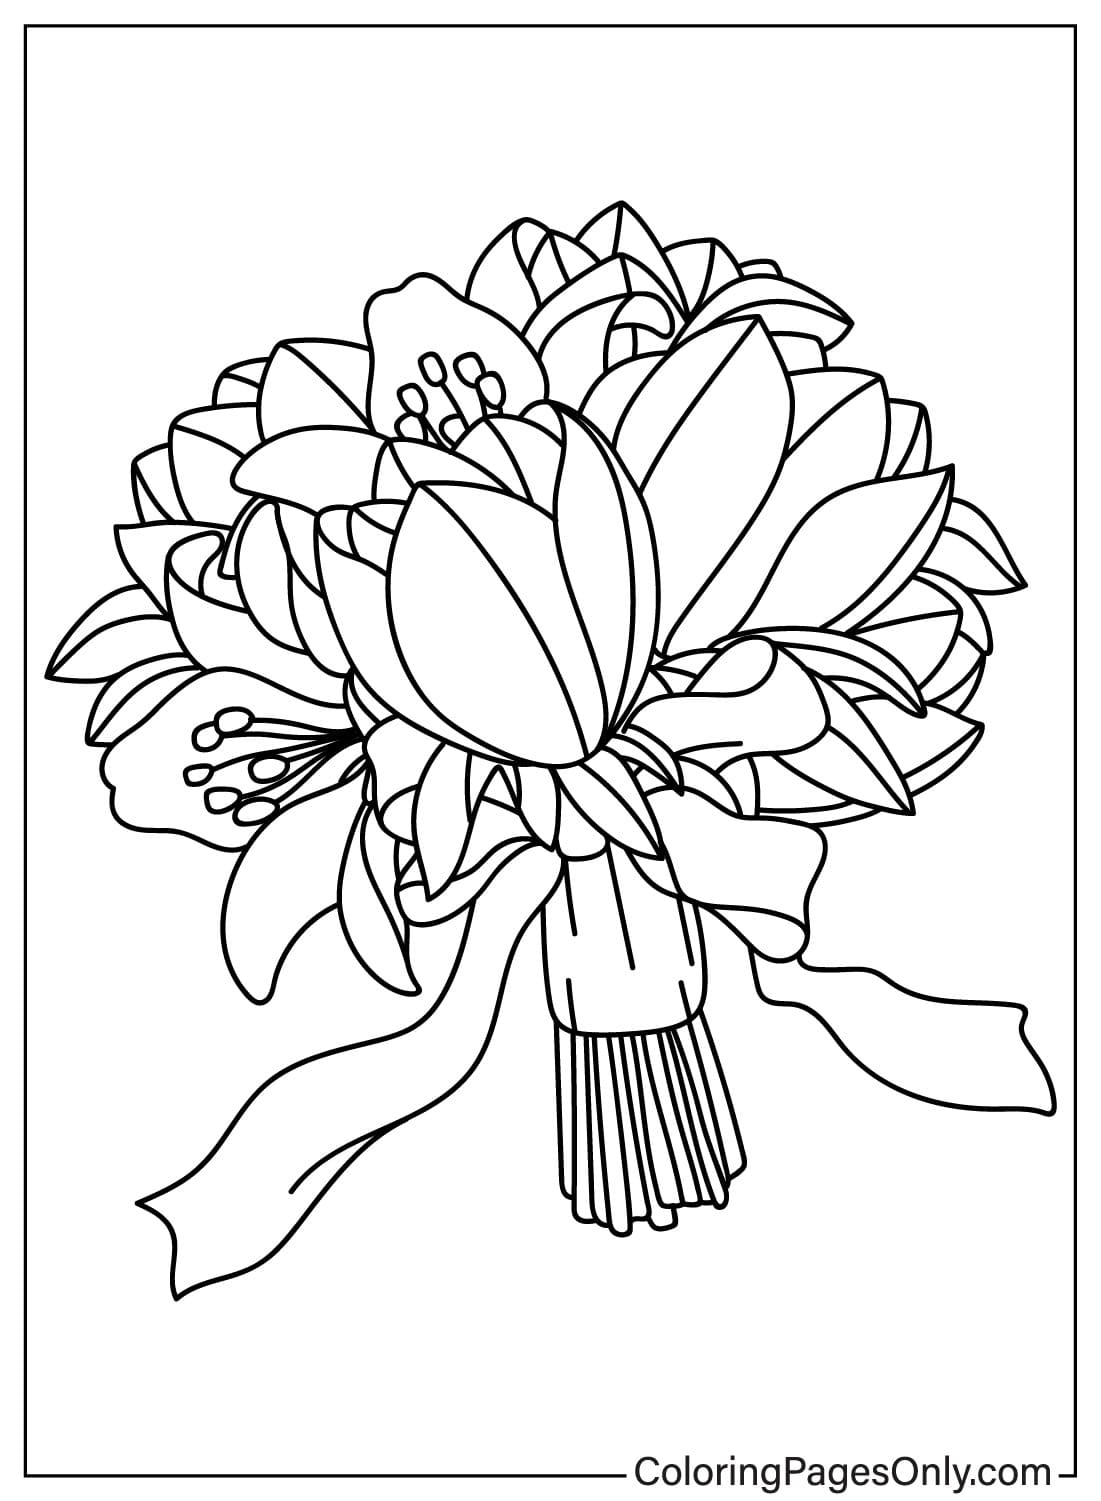 Buquê de flores de página colorida de Bouquet de flores